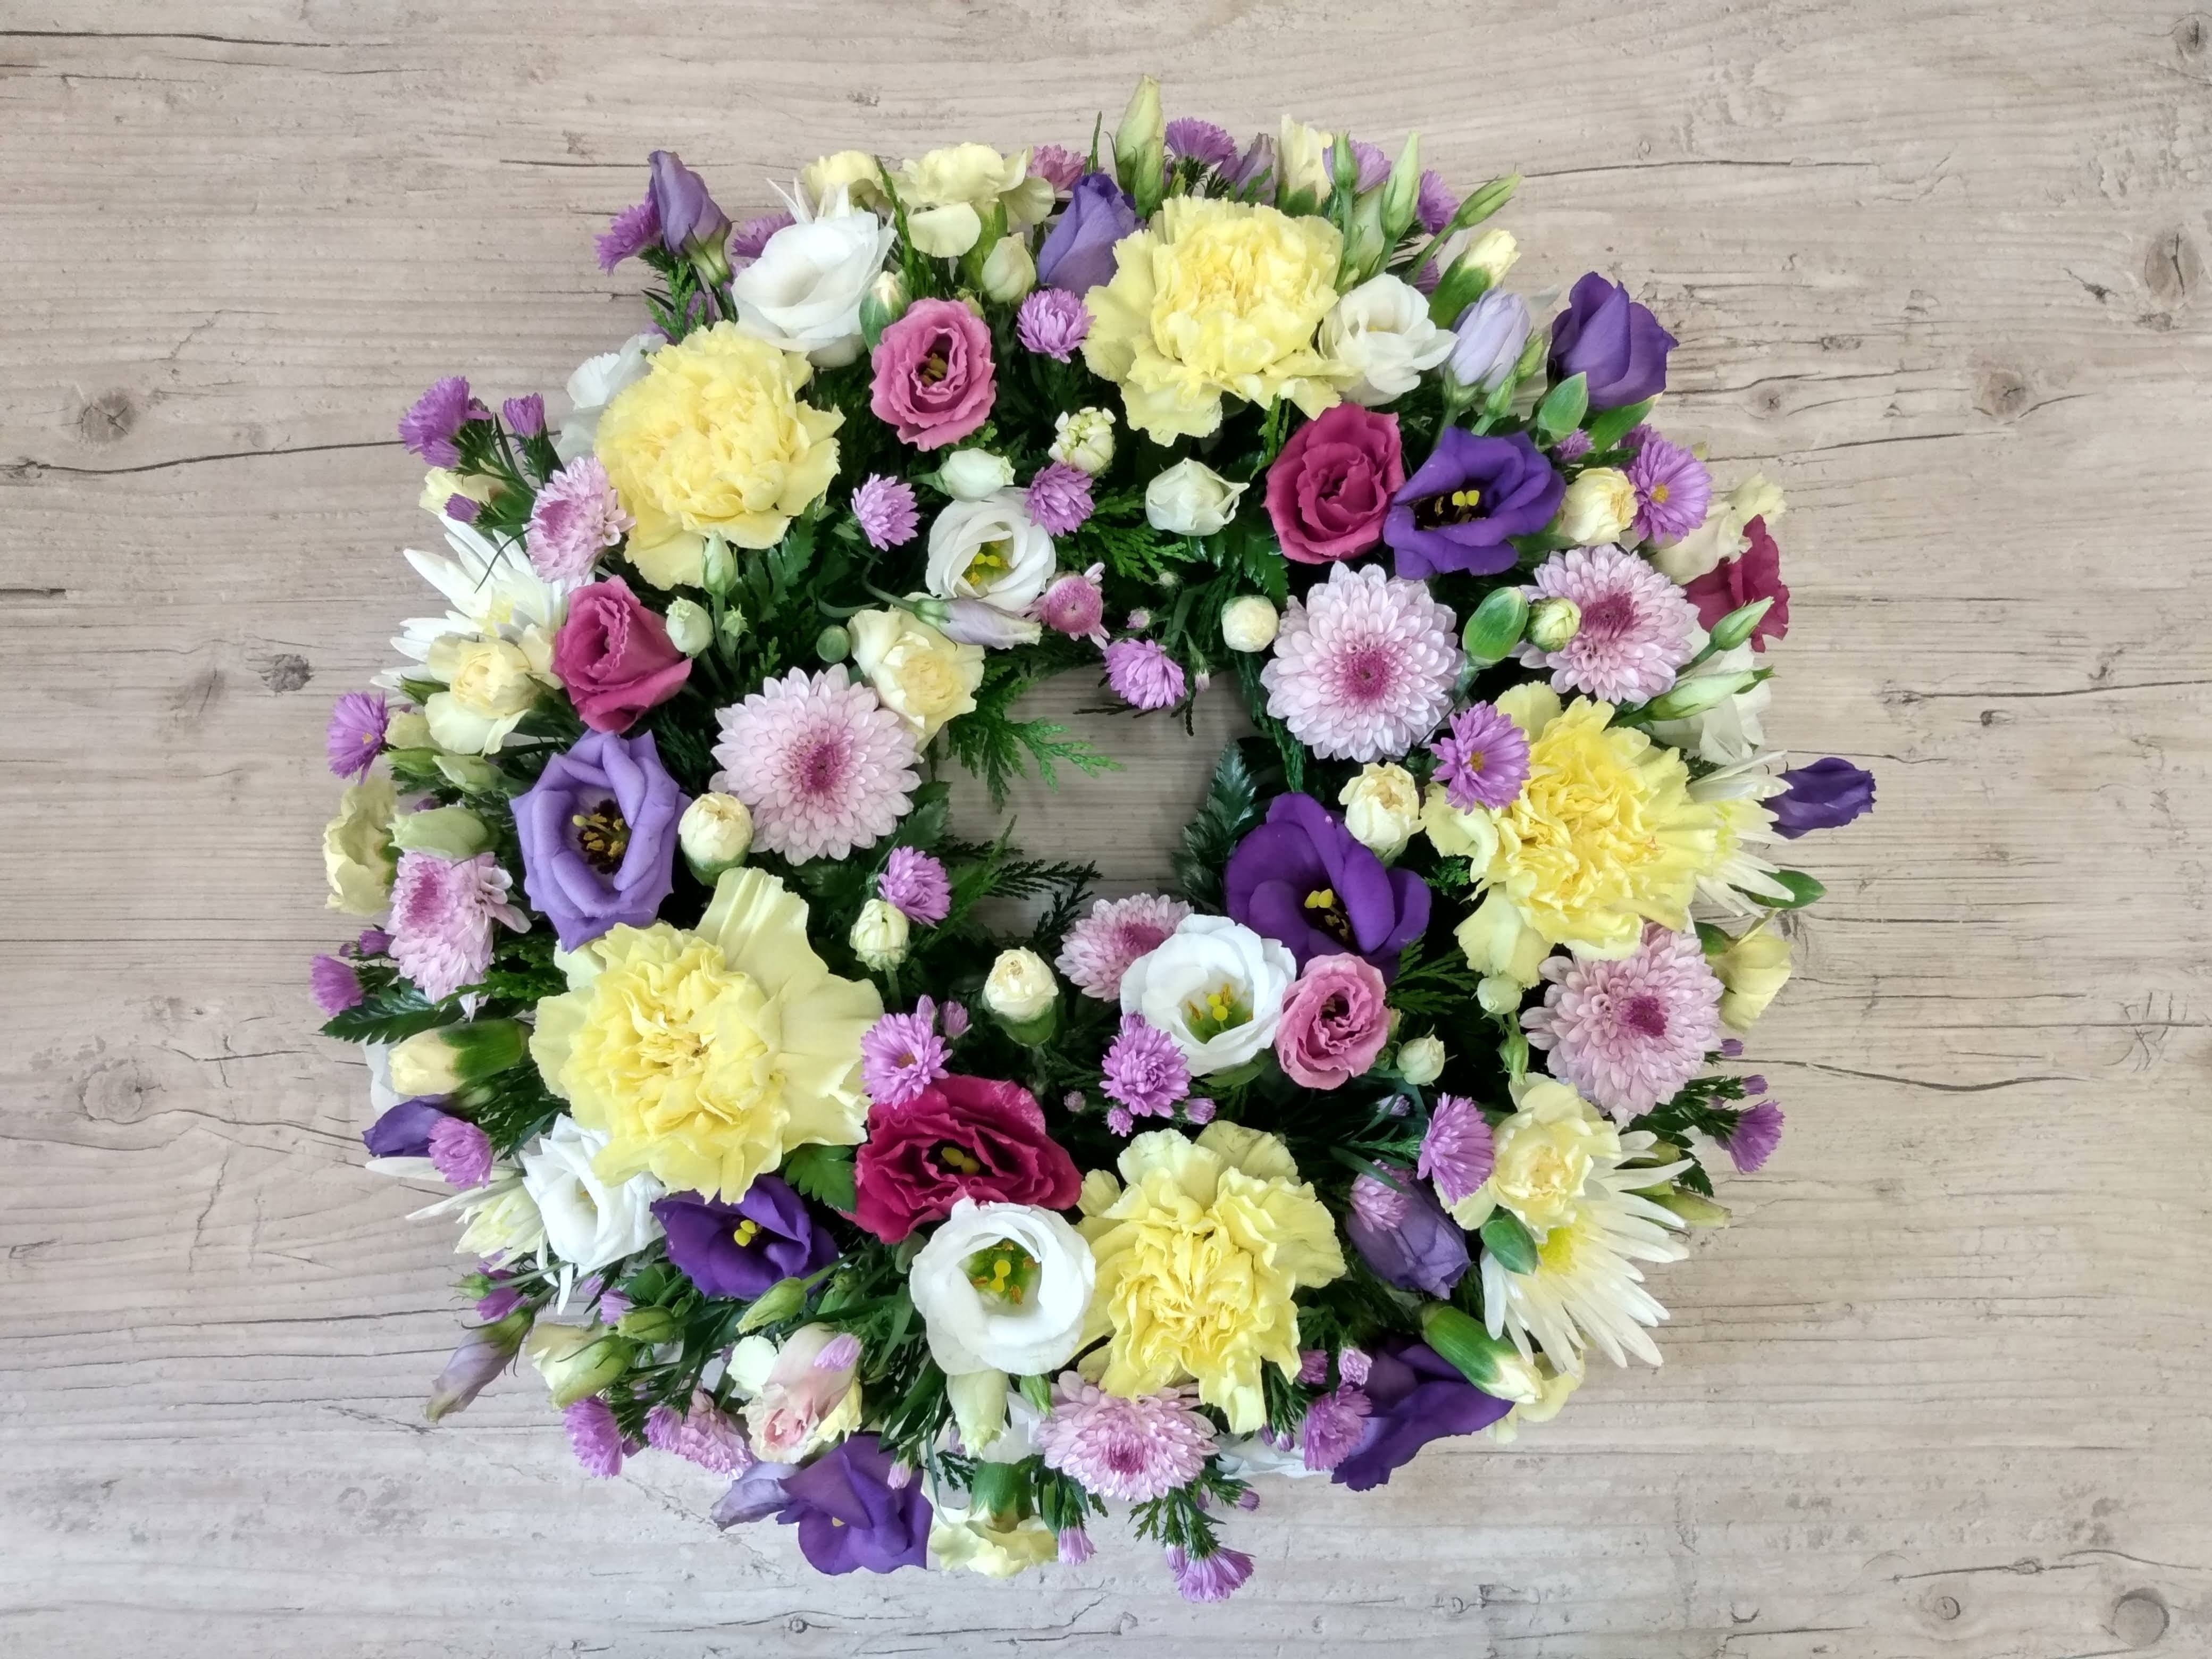 Florist Choice Wreath Bright Funeral Arrangement